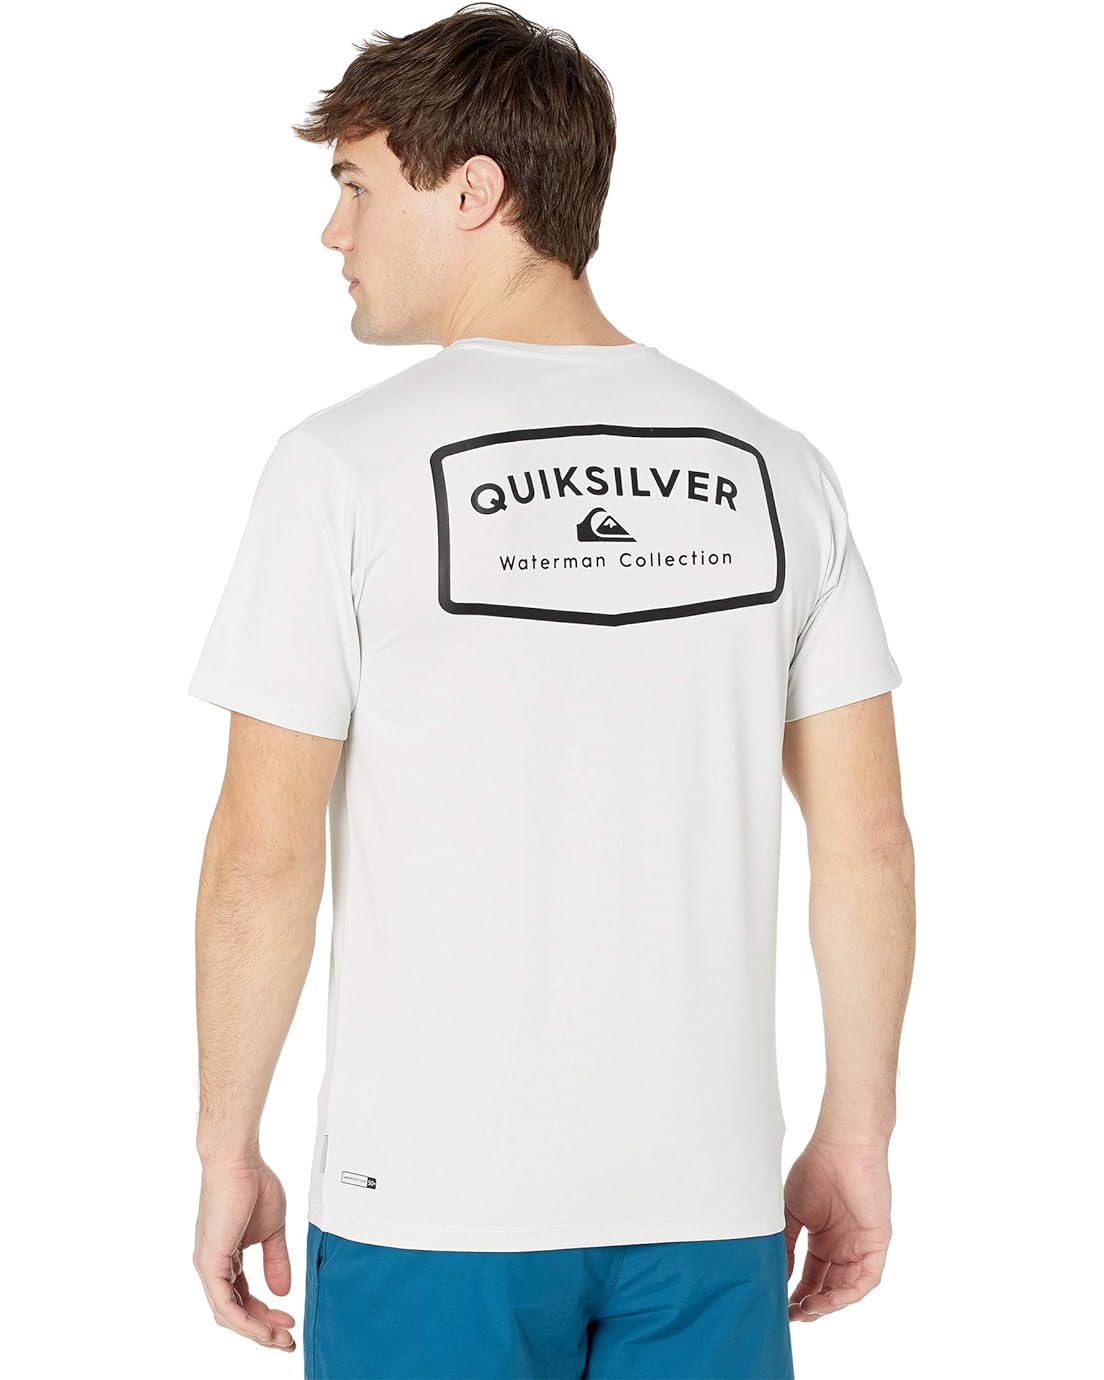 Quiksilver Waterman Gut Check Short Sleeve Rashguard